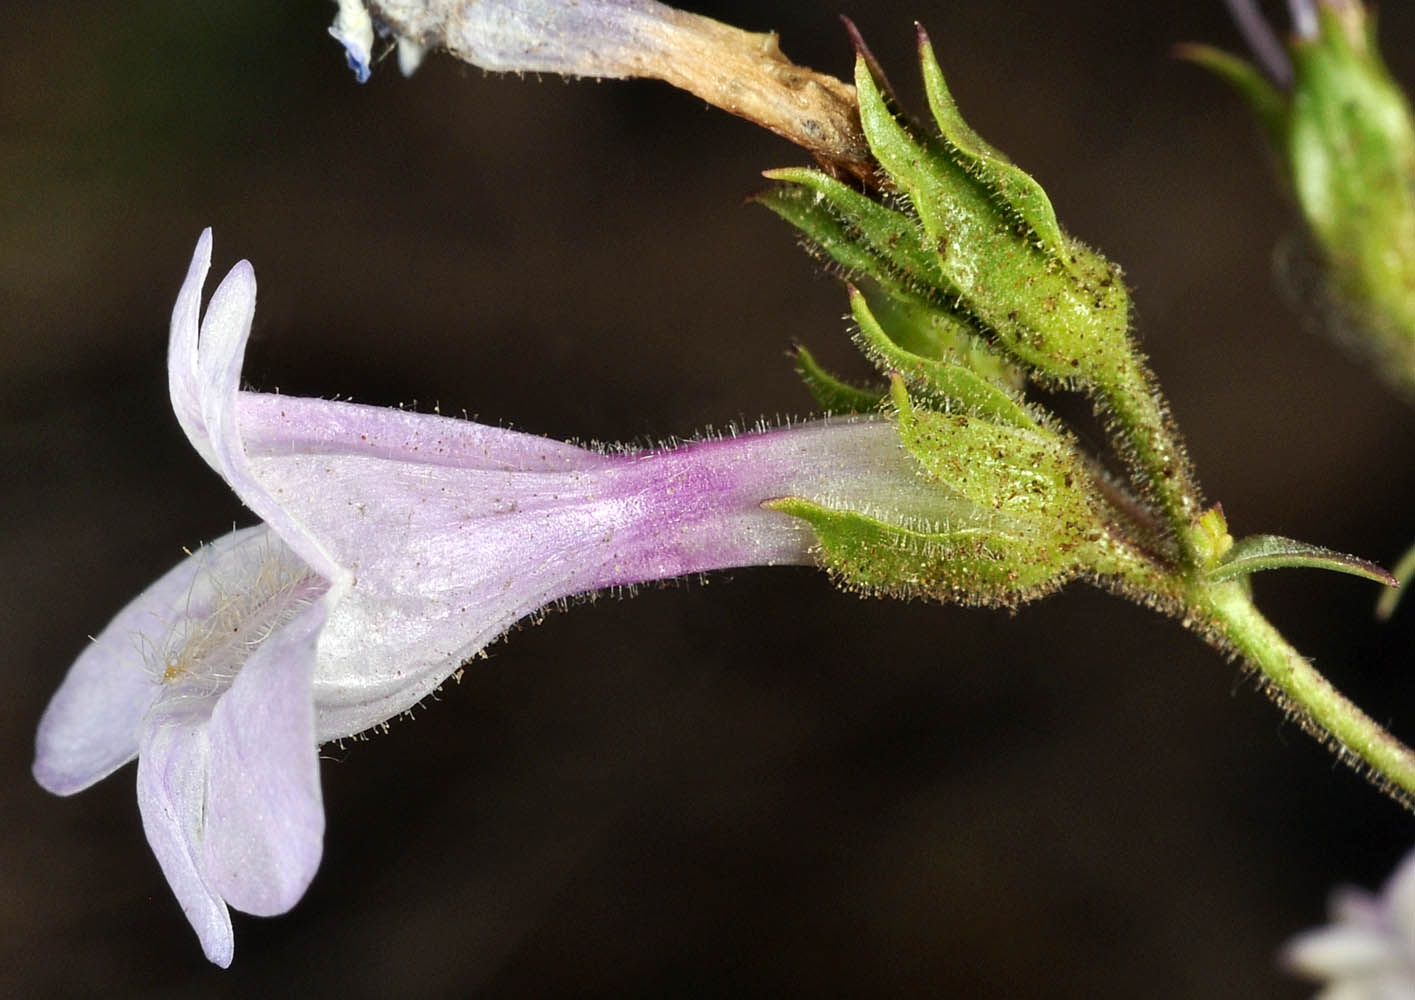 Flora of Eastern Washington Image: Penstemon triphyllus